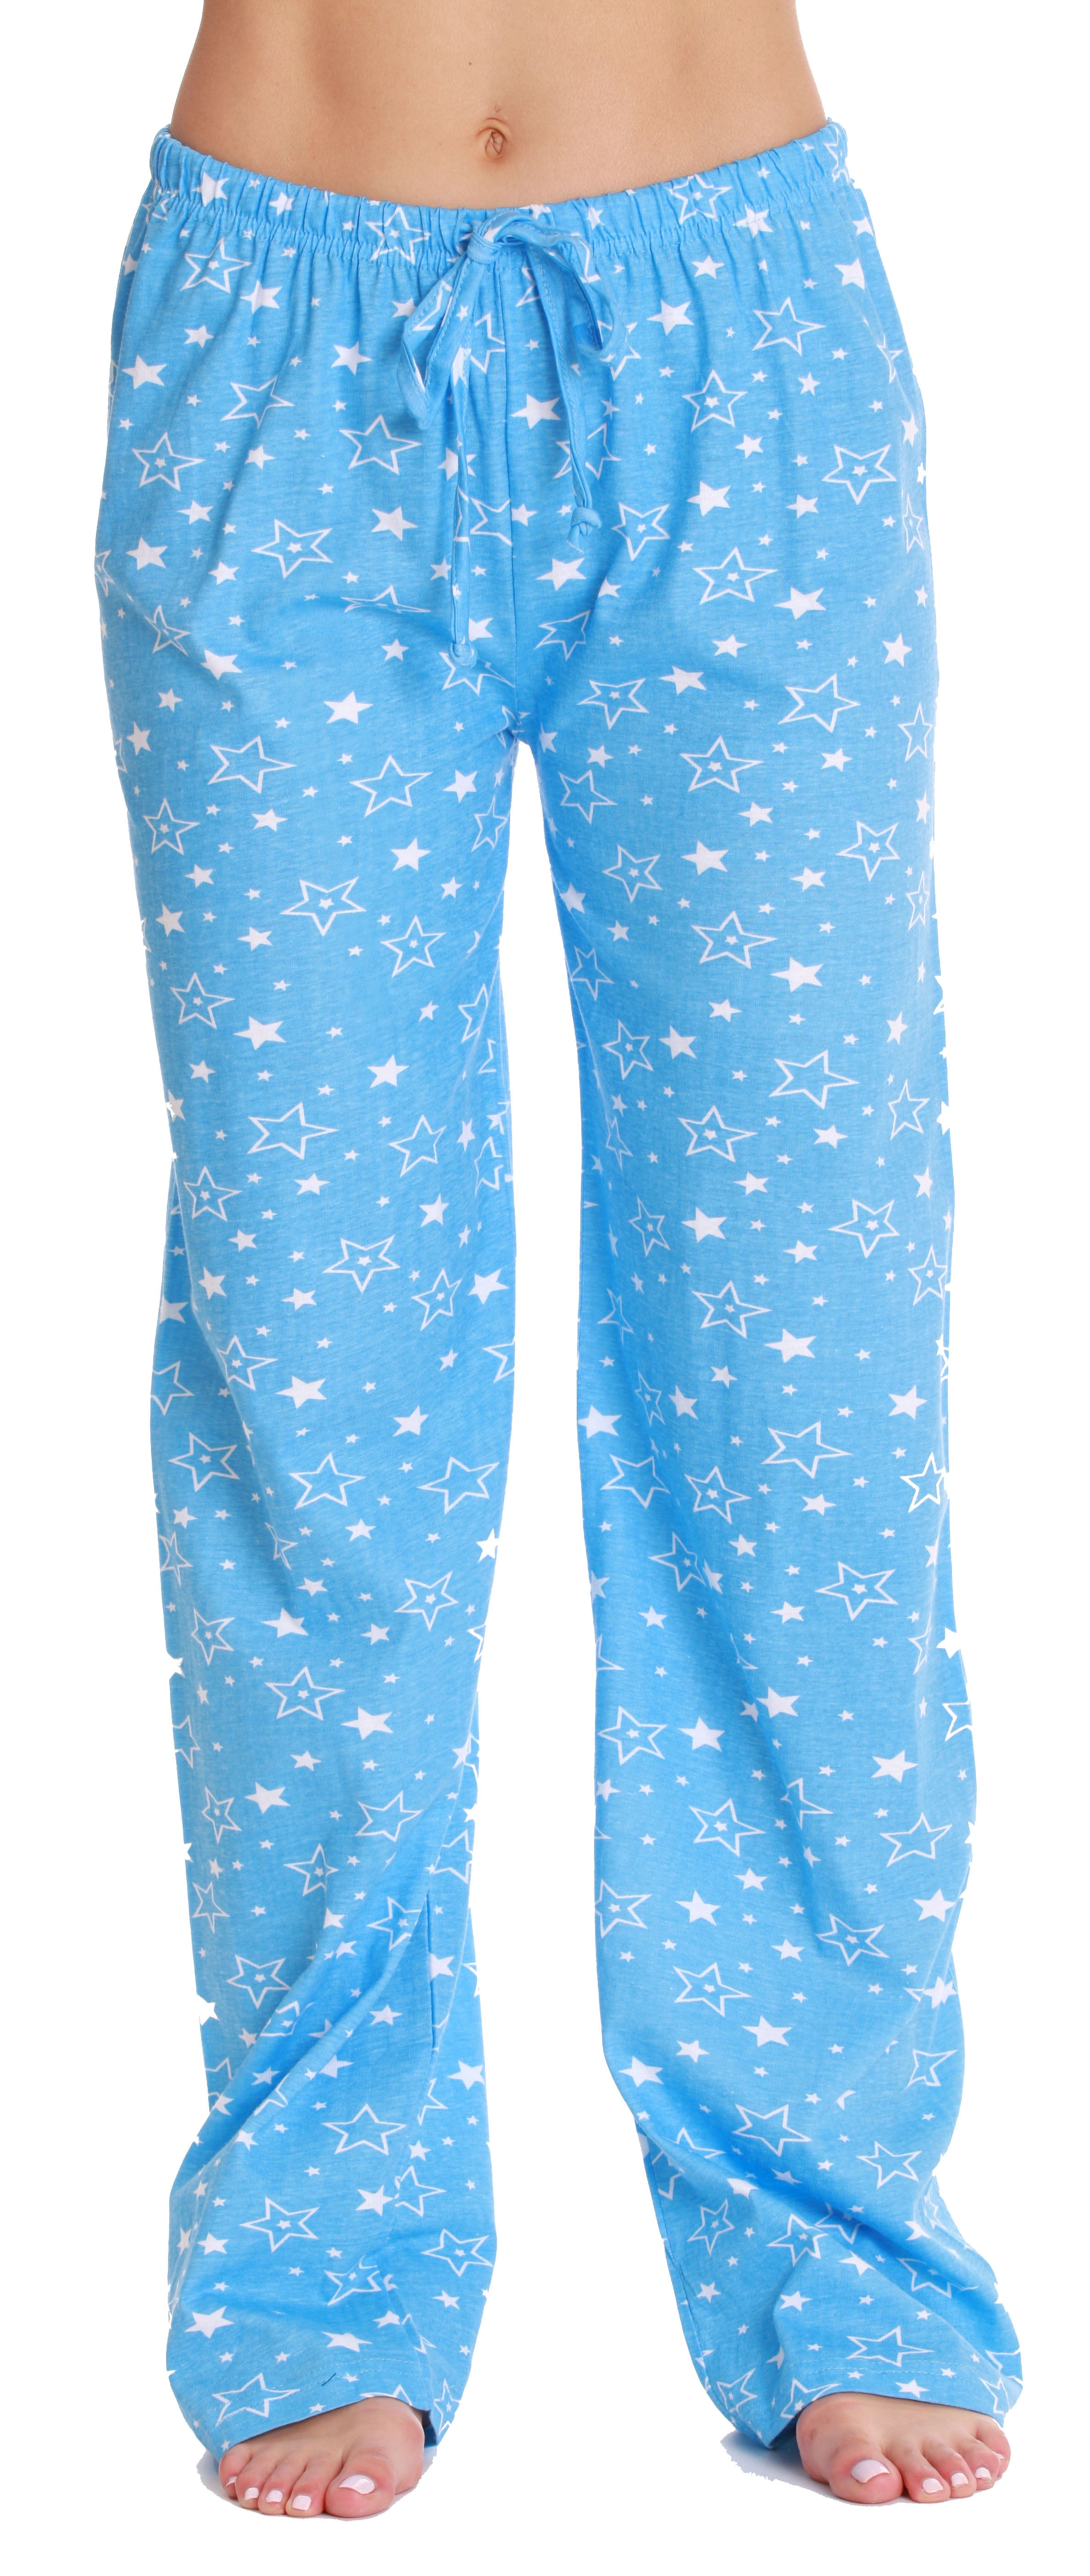 Women's Pajama Pants Cute Lambs Sleepwear Lounge Pajama Bottoms XS